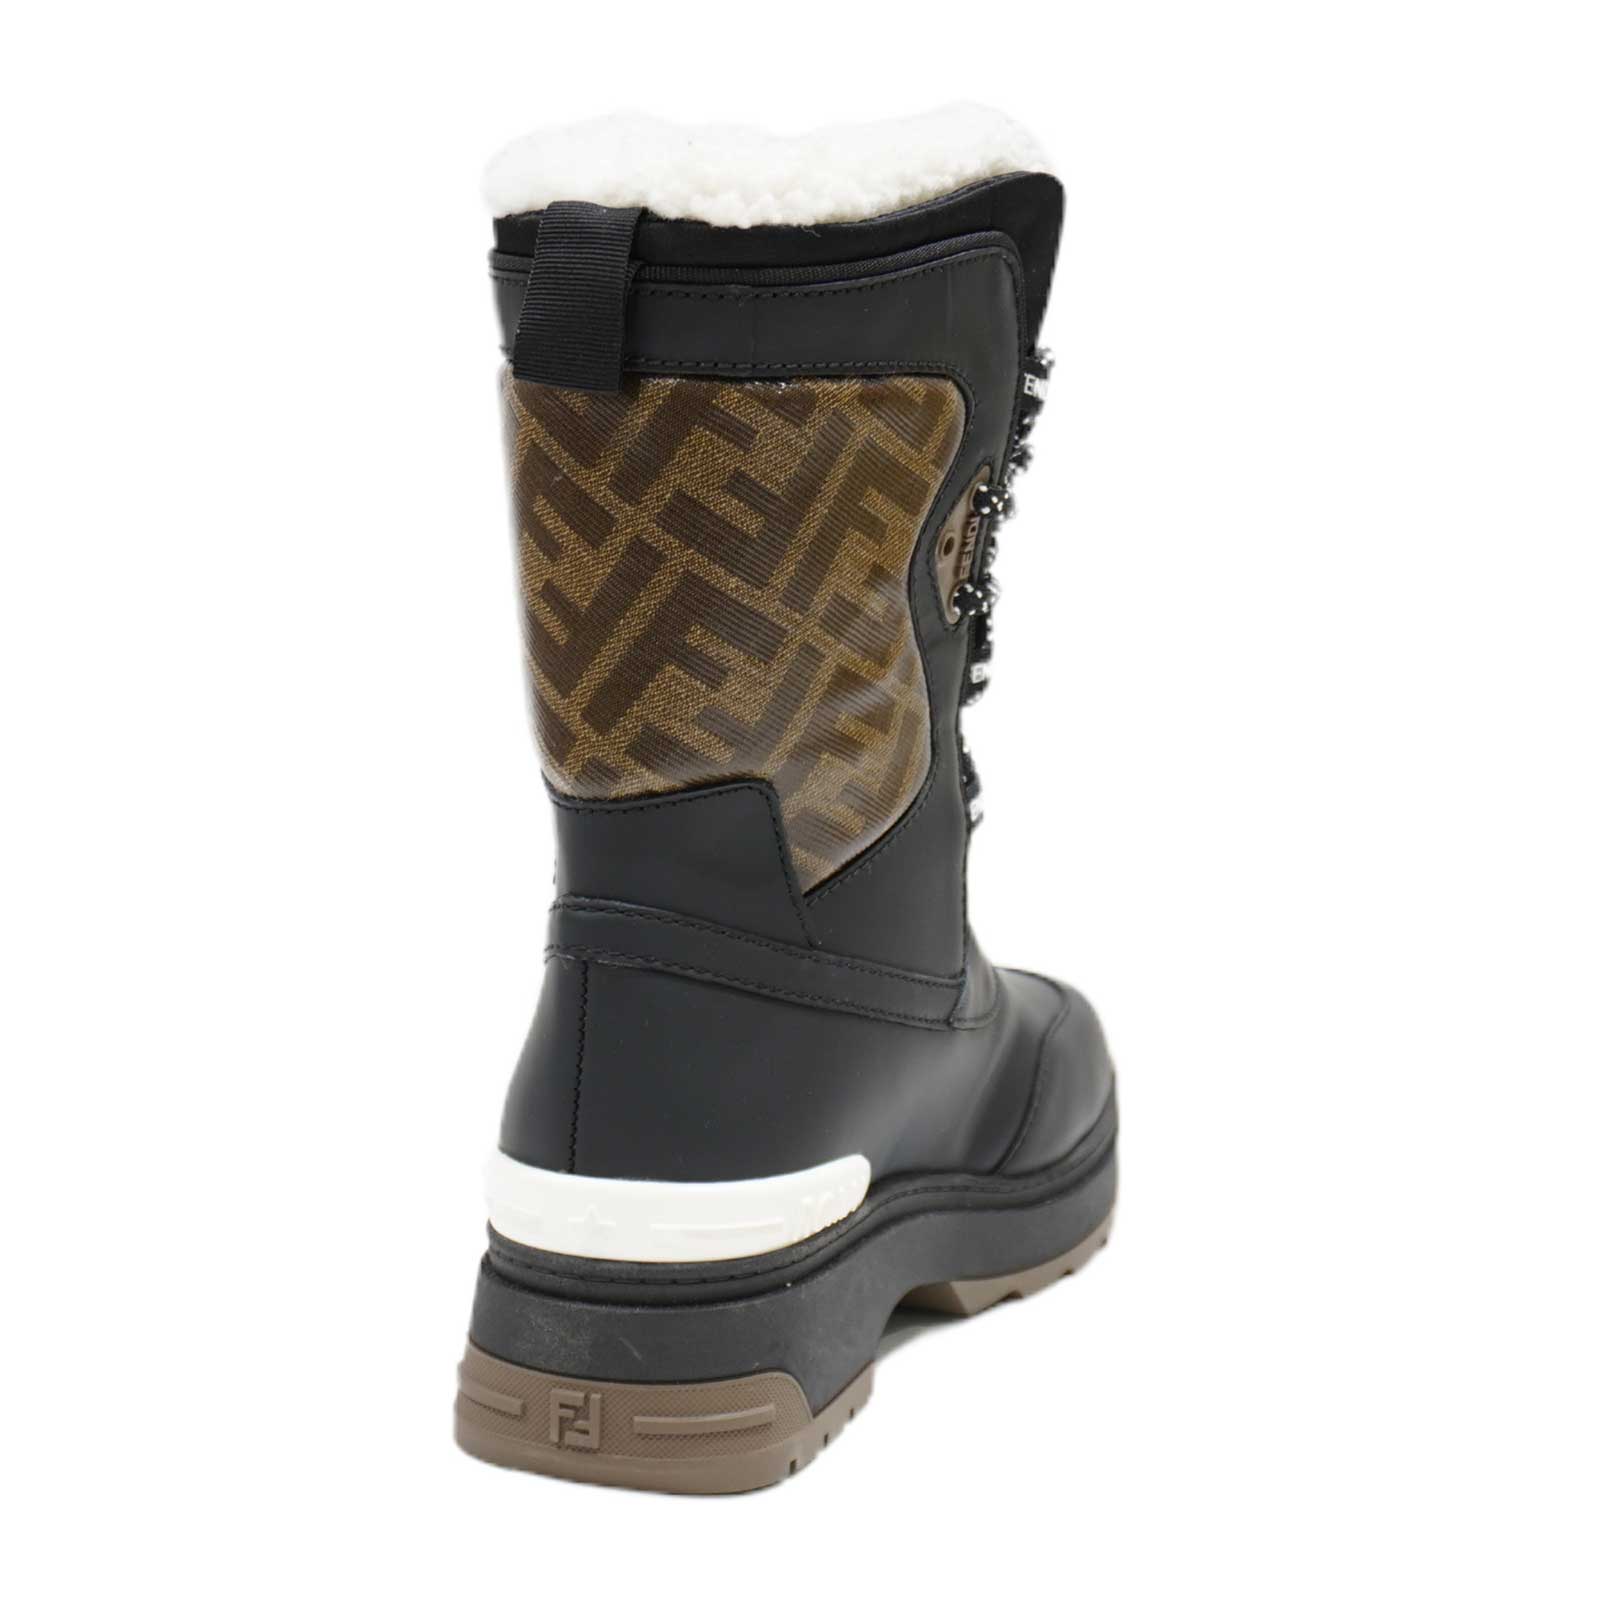 FENDI( Fendi ) boots 172209 shoes 35 22cm black / Brown car fs gold / sheepskin unused A48